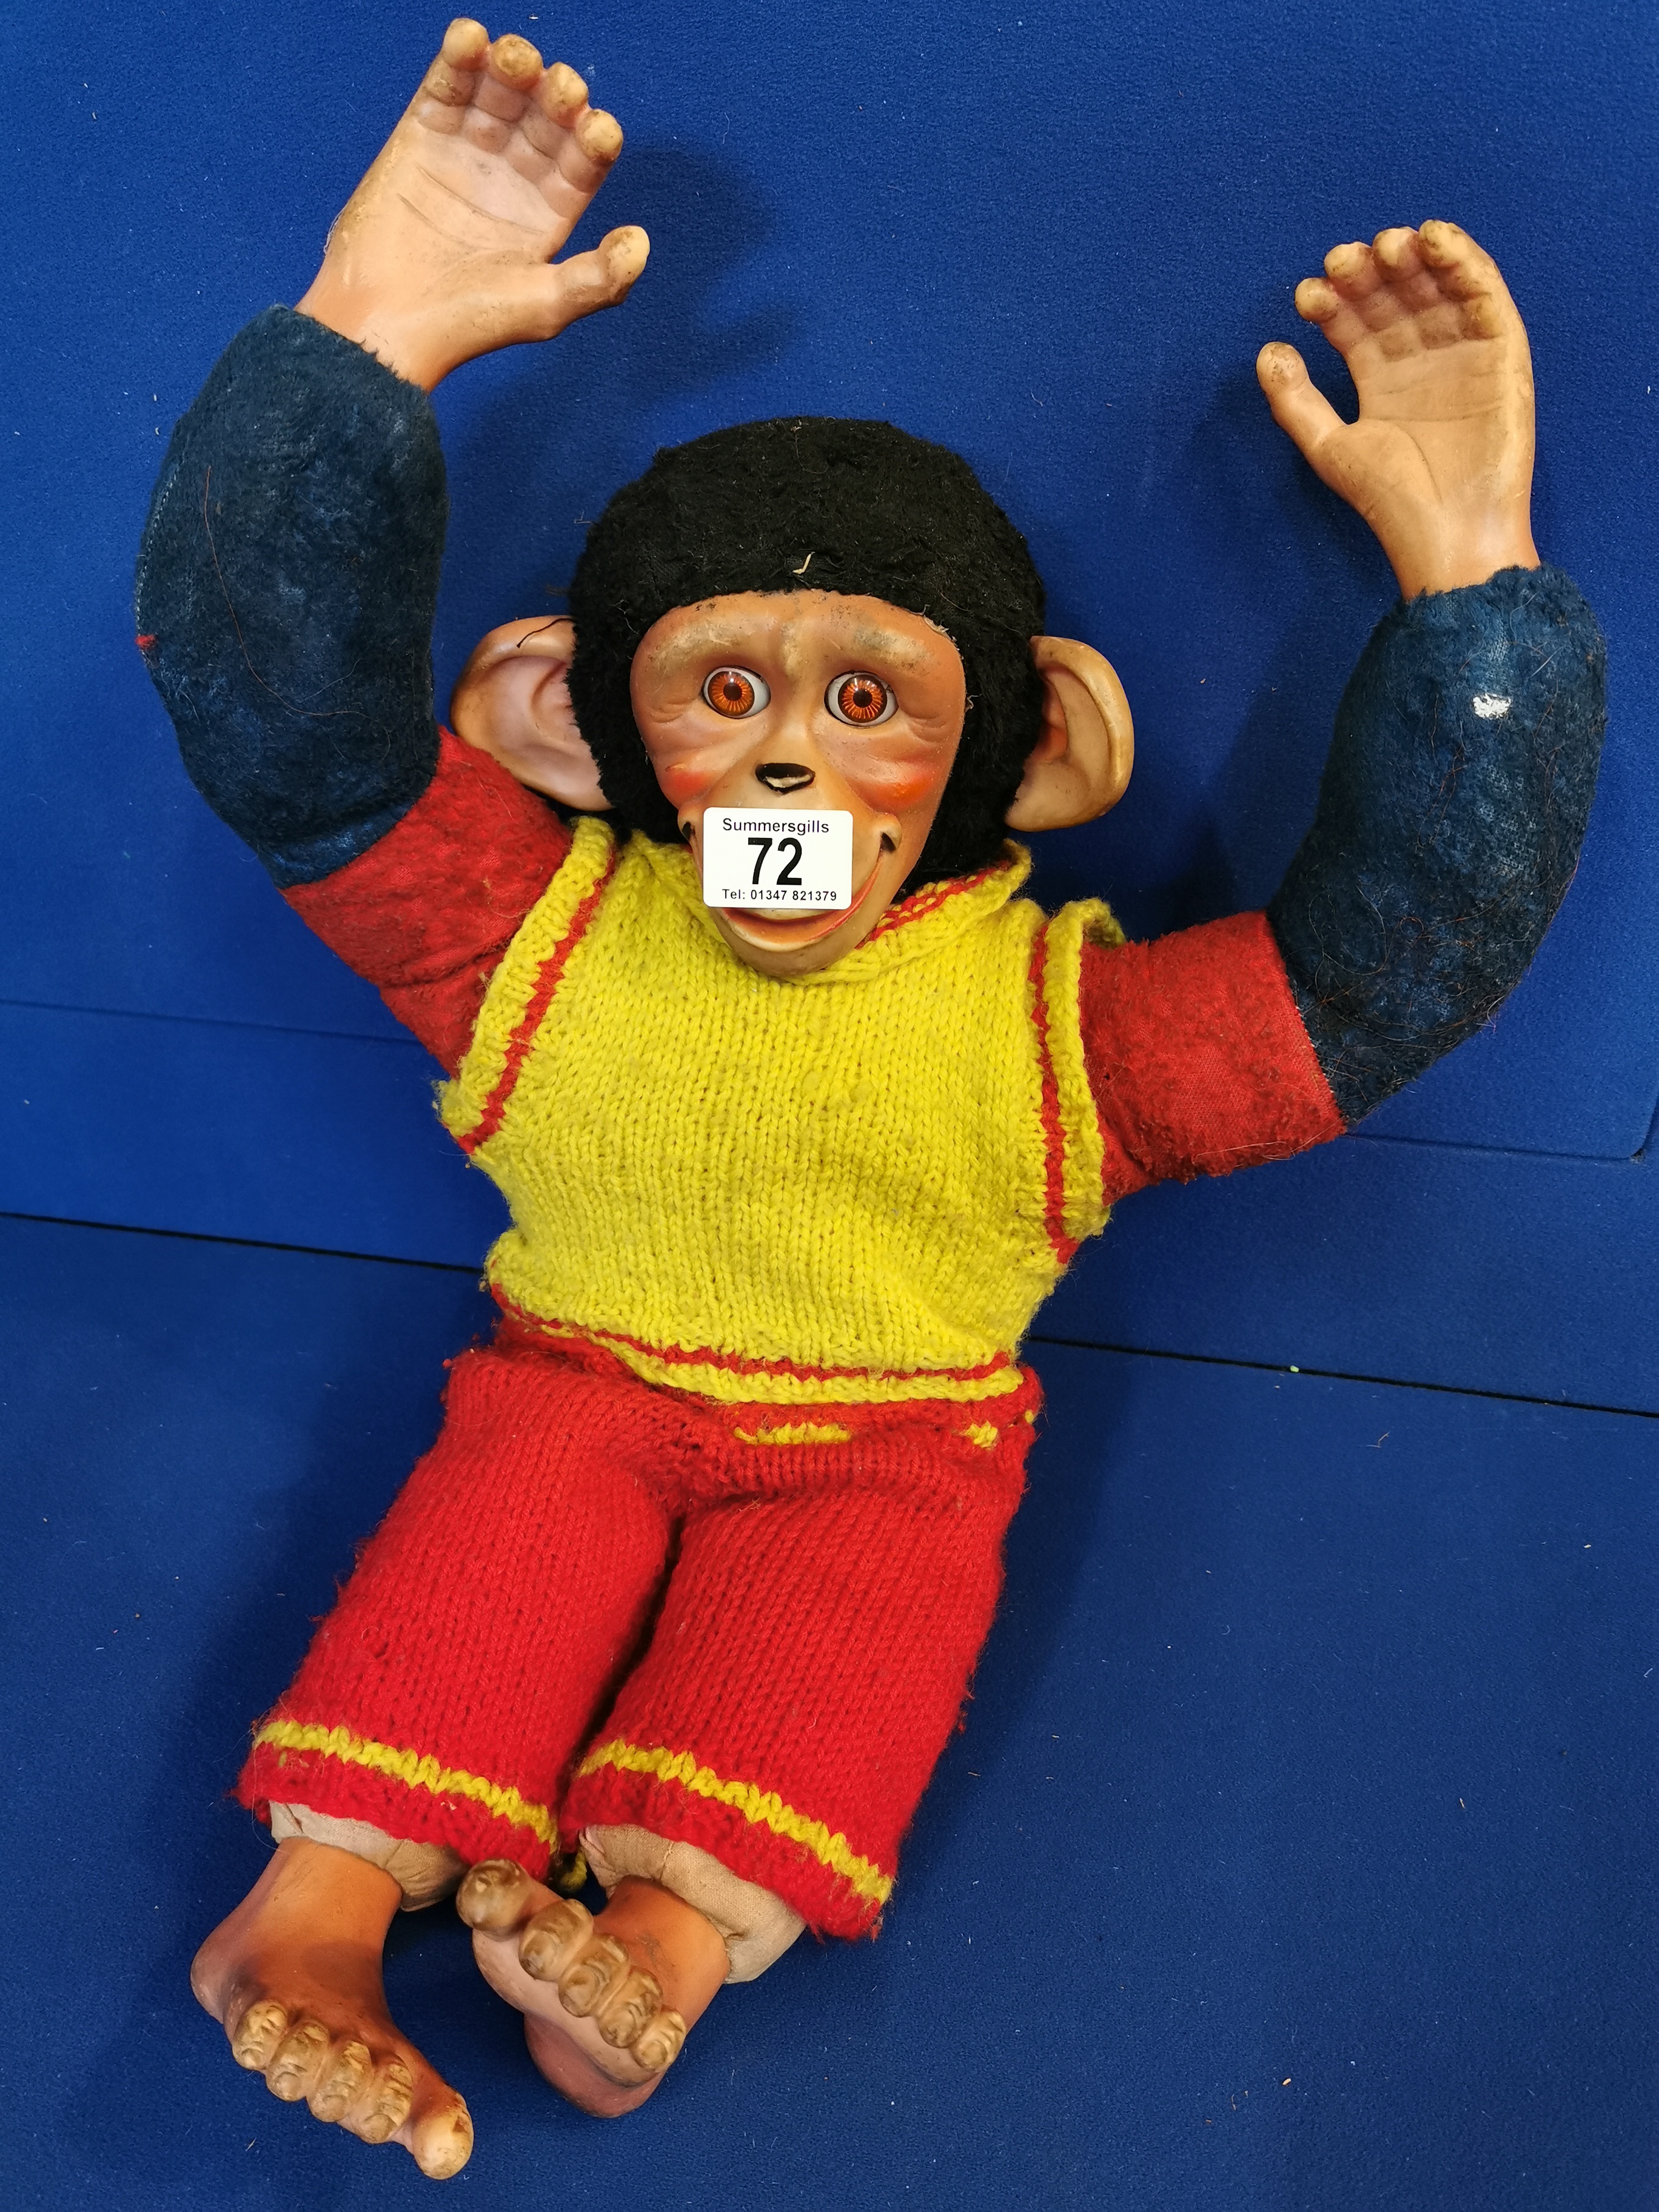 Vintage Toy Chimpanzee